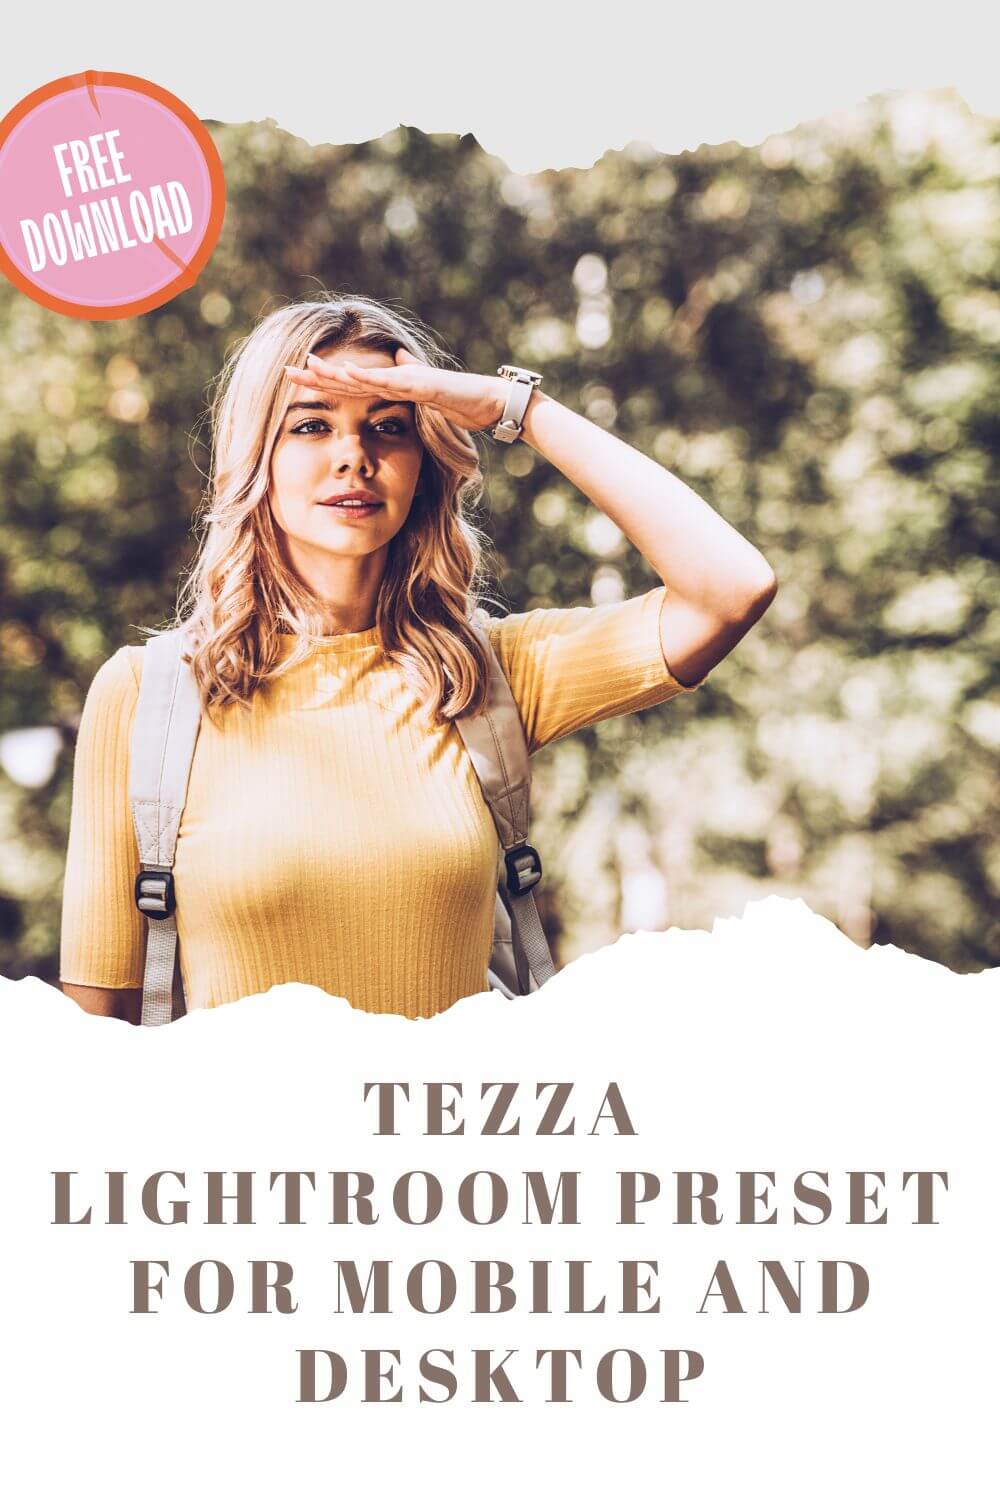 Tezza Lightroom Preset For Mobile and Desktop Pinterest